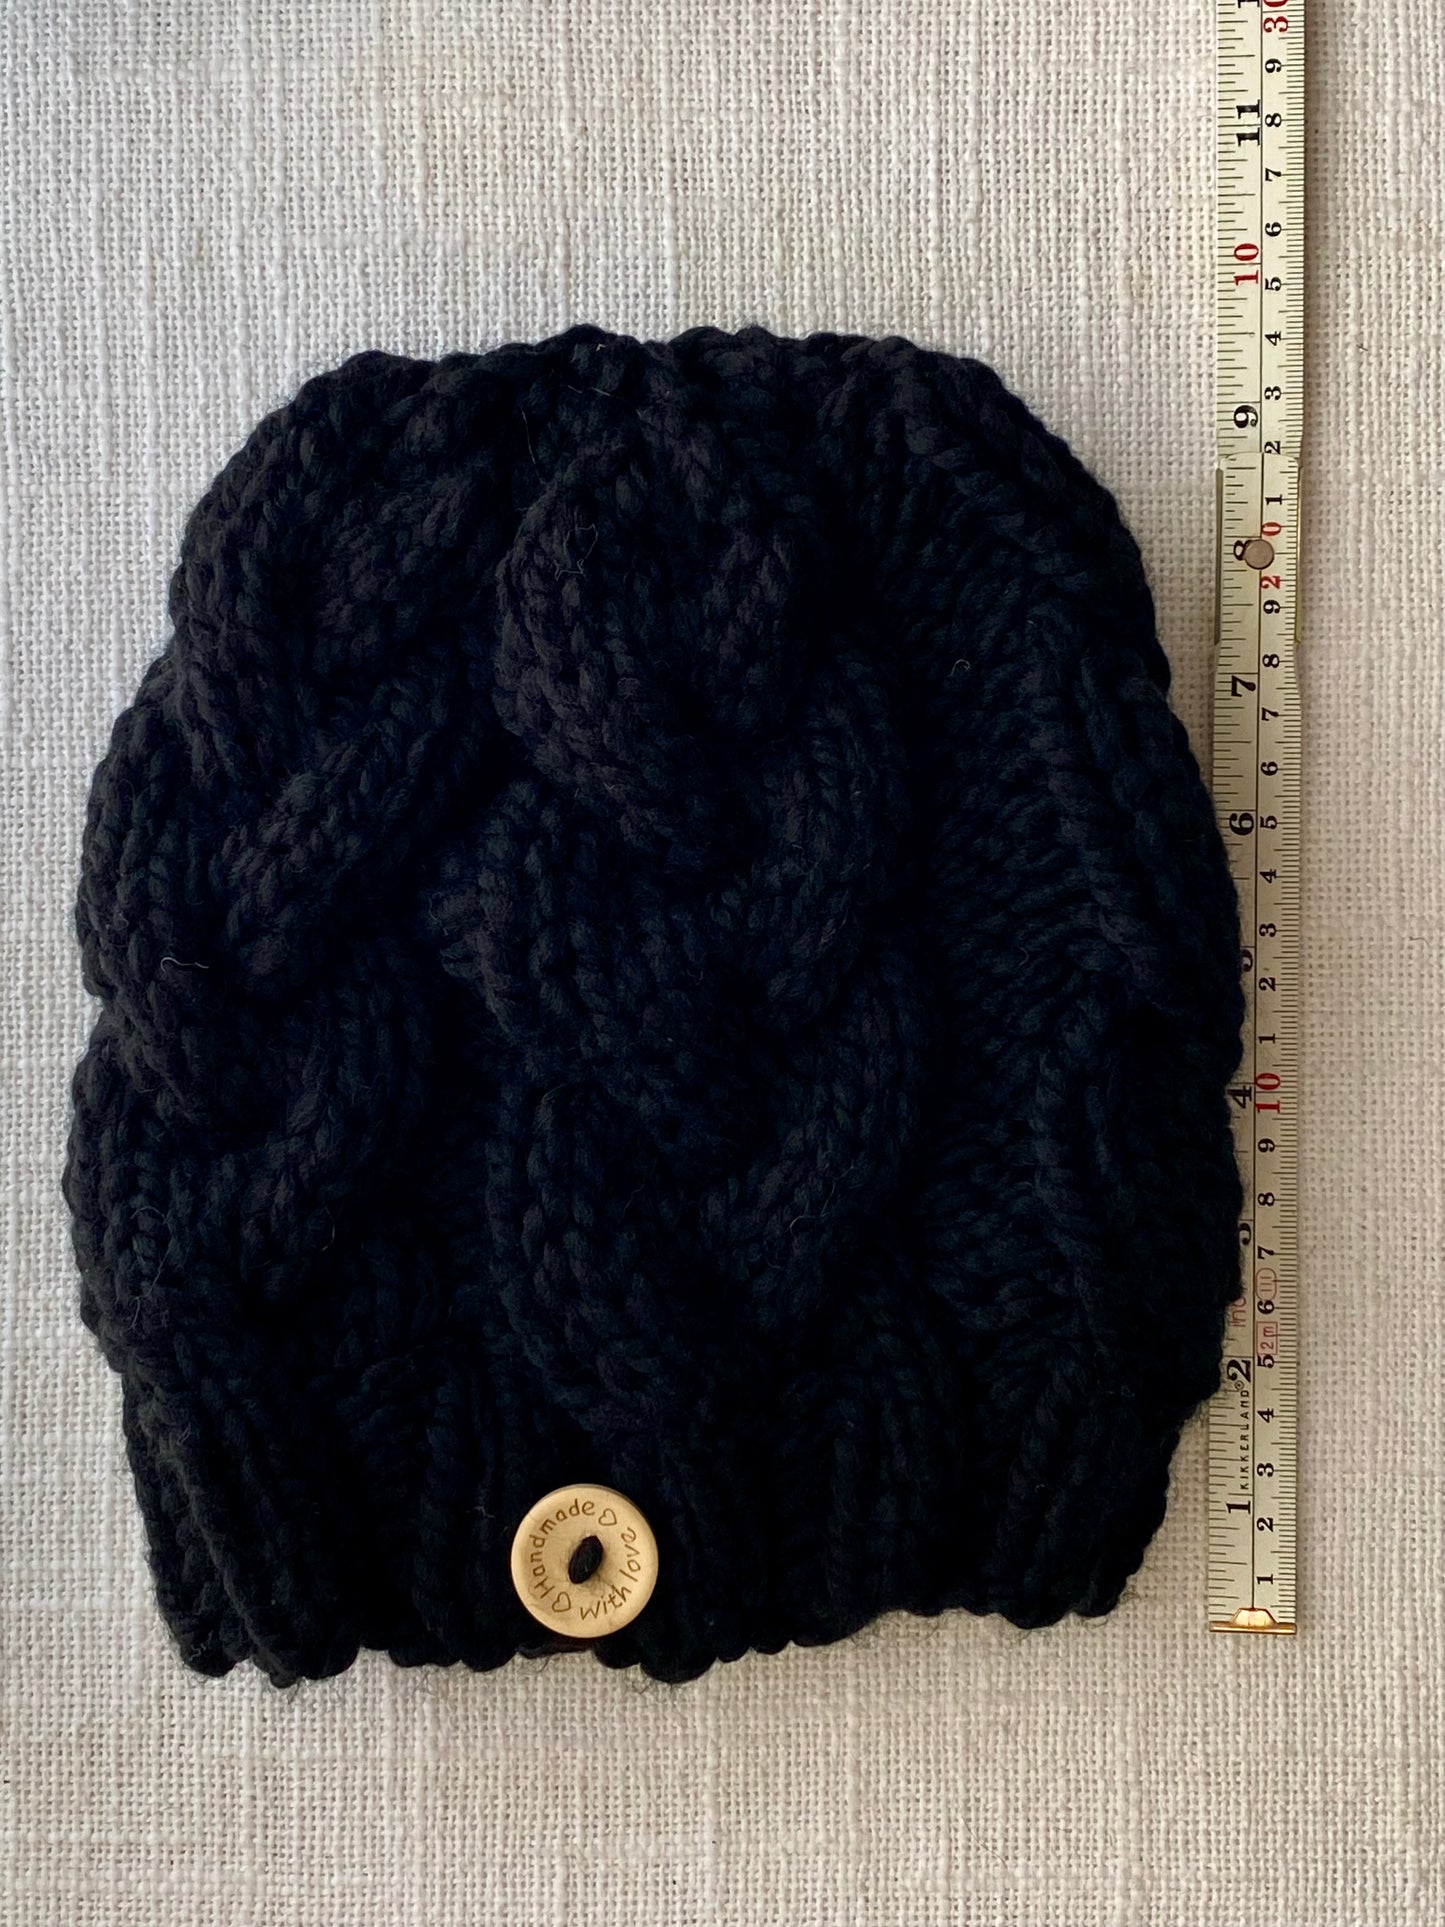 Cozy Cables Hat - Wool Blend Fiber in Raven